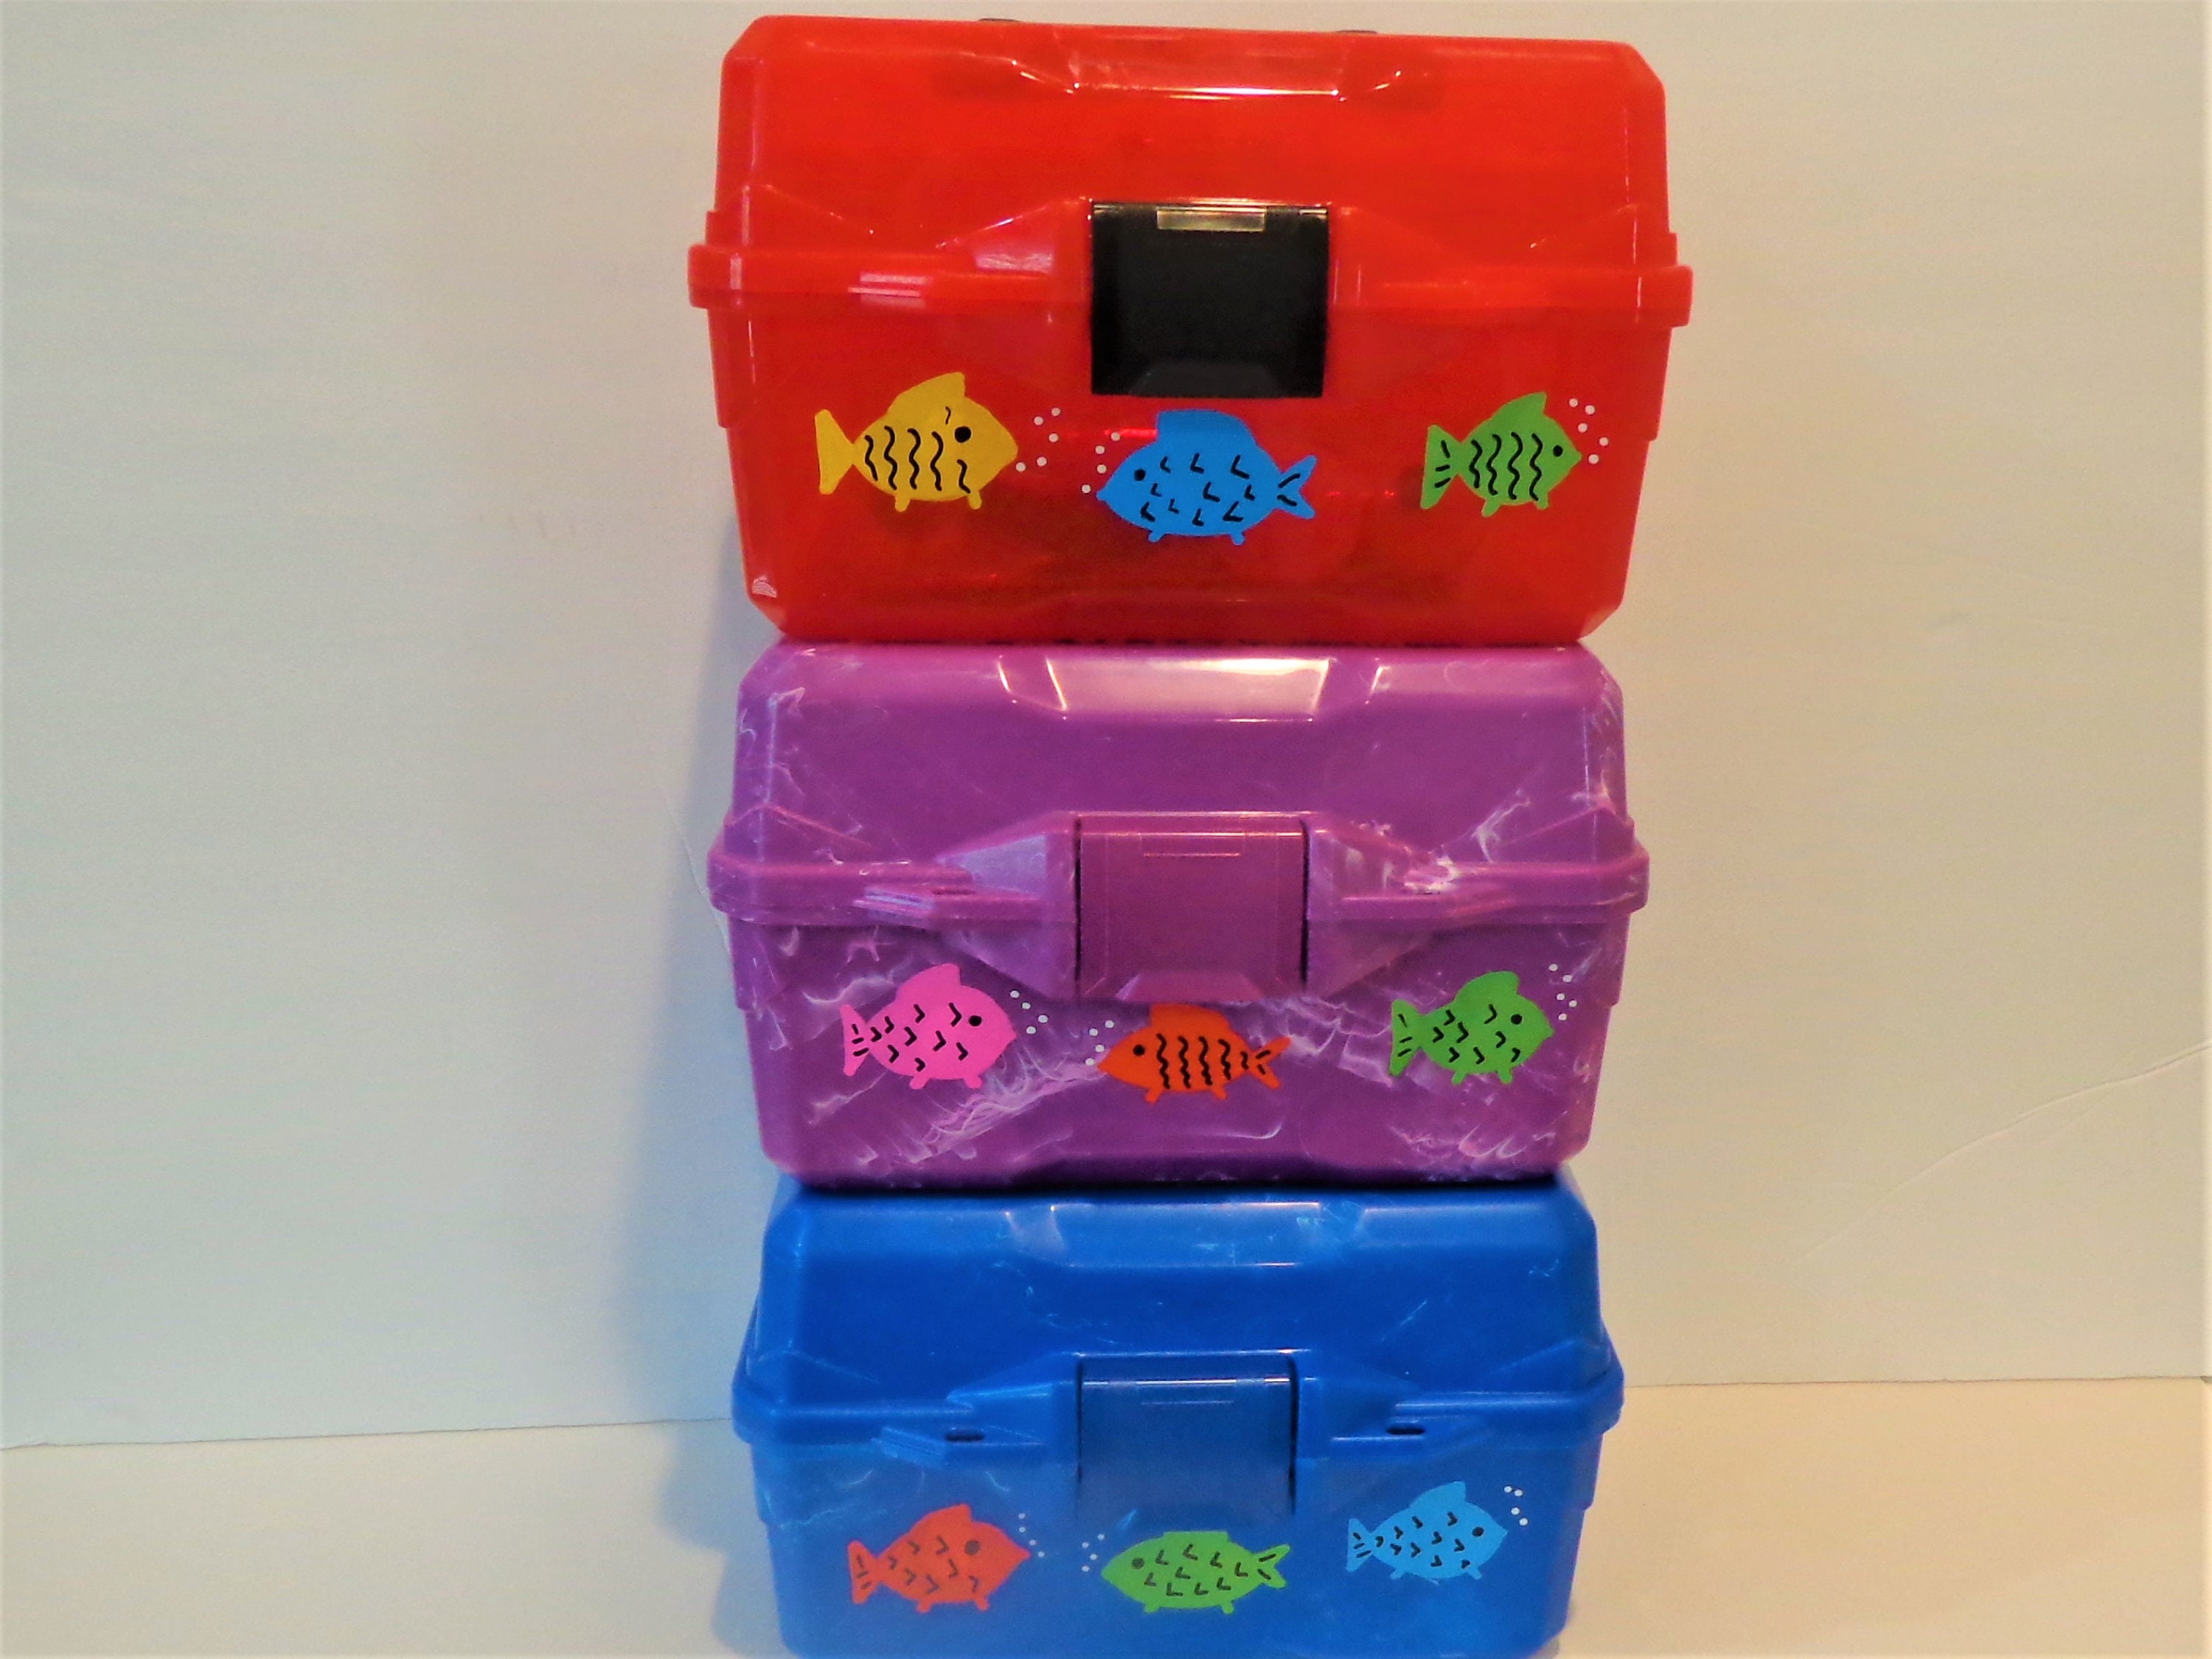 Kids Personalized Fishing Tackle Box 